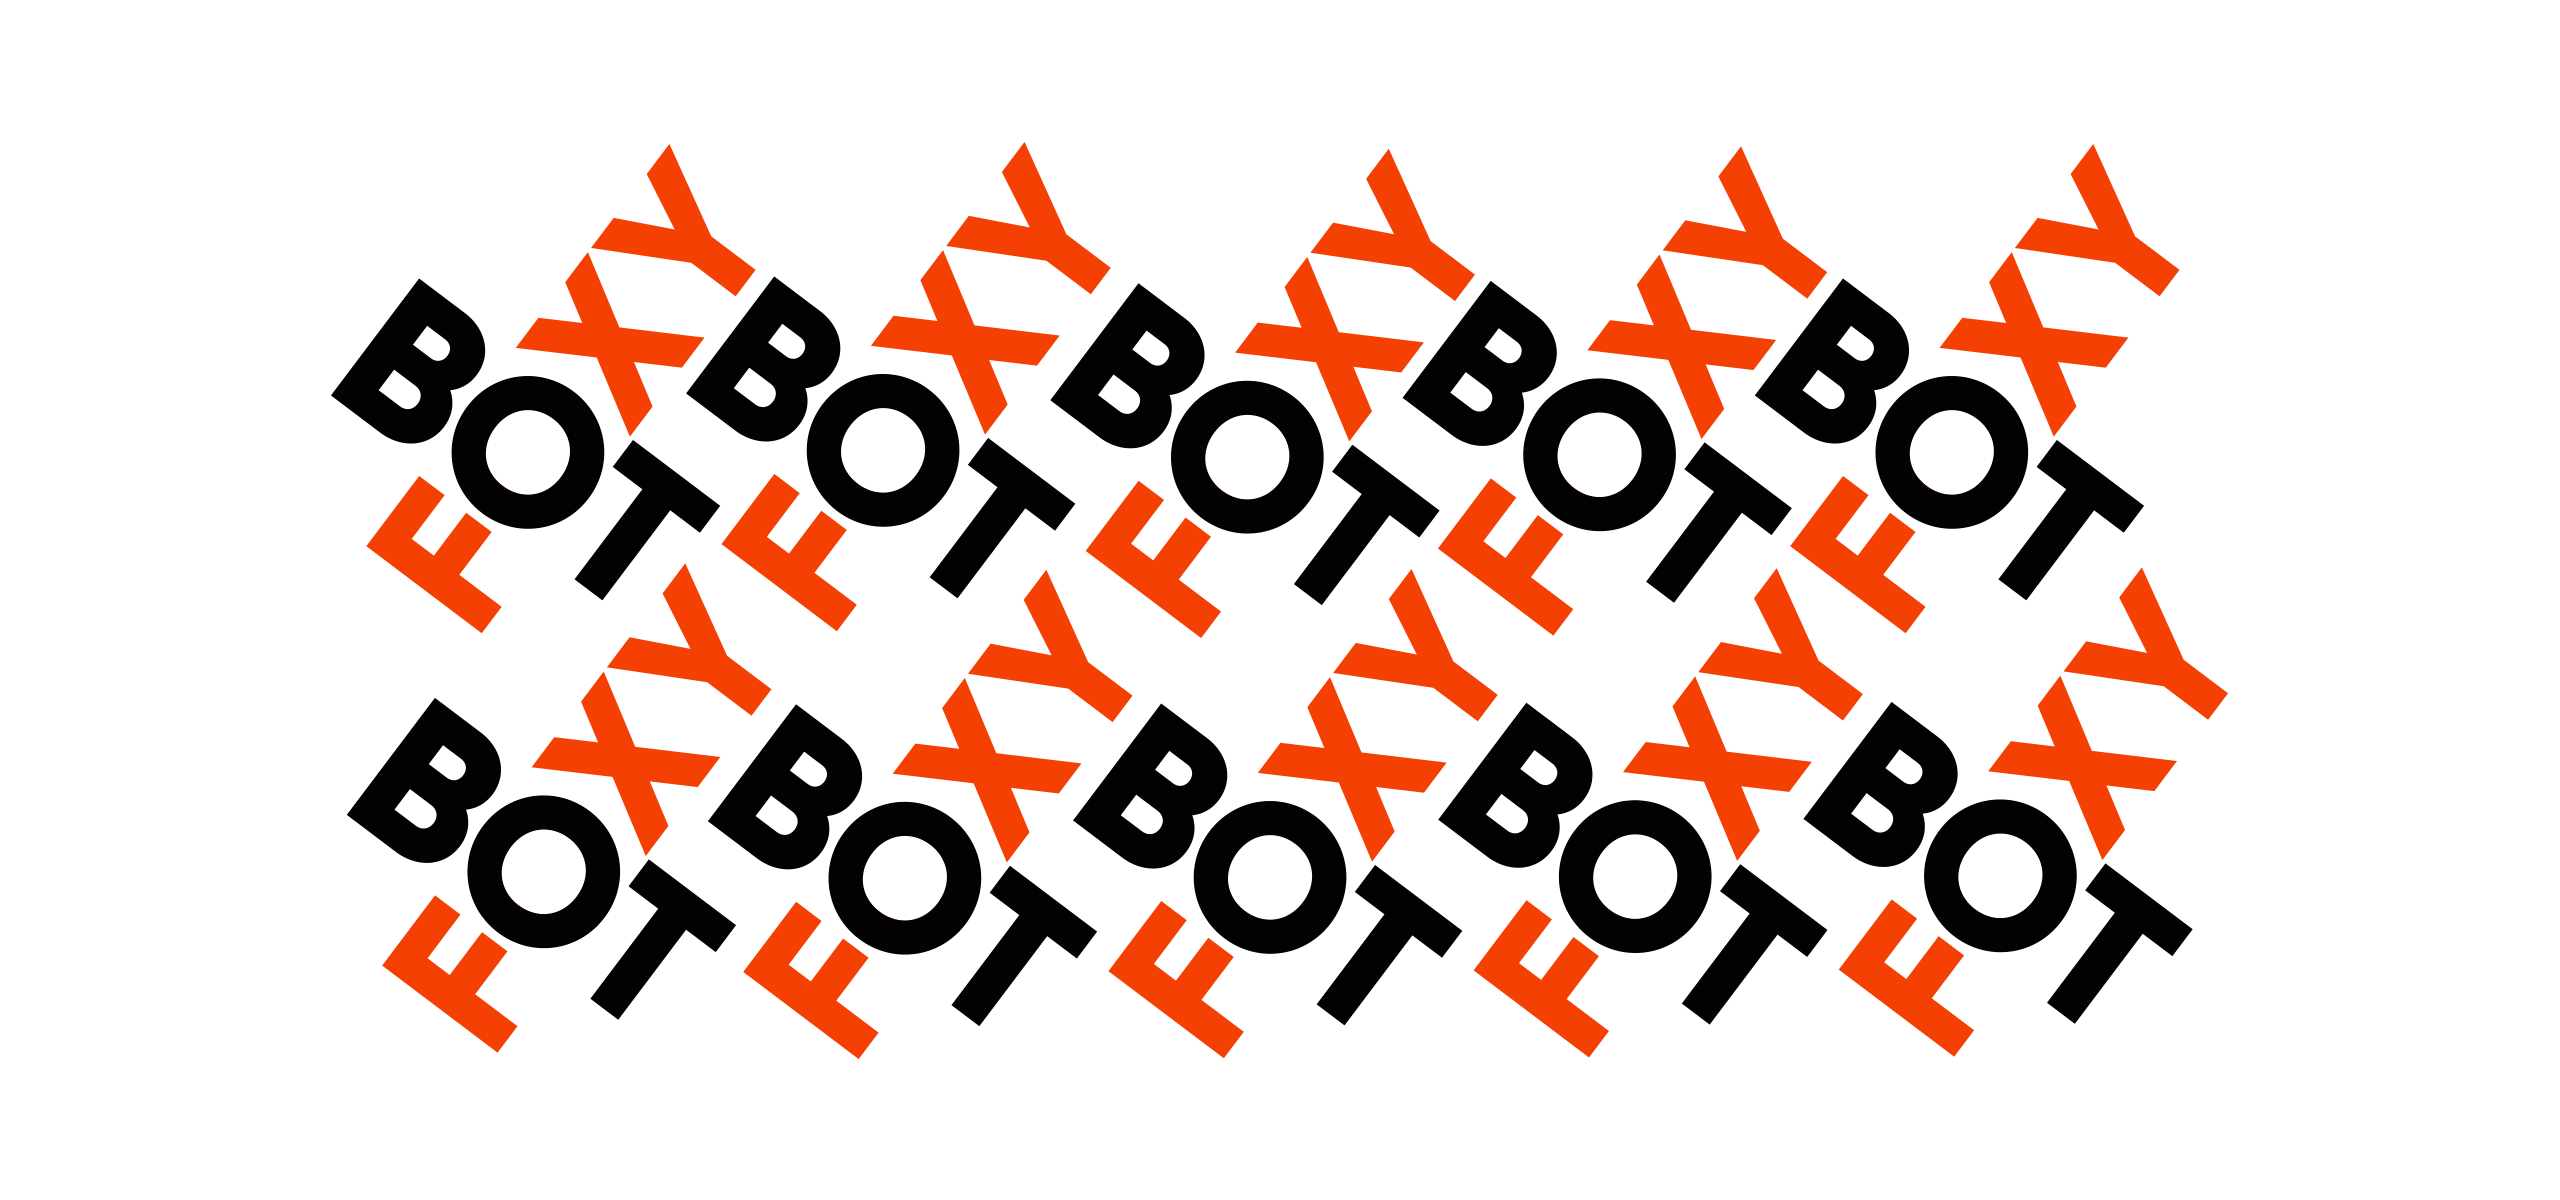 FoxyBot Typography Pattern